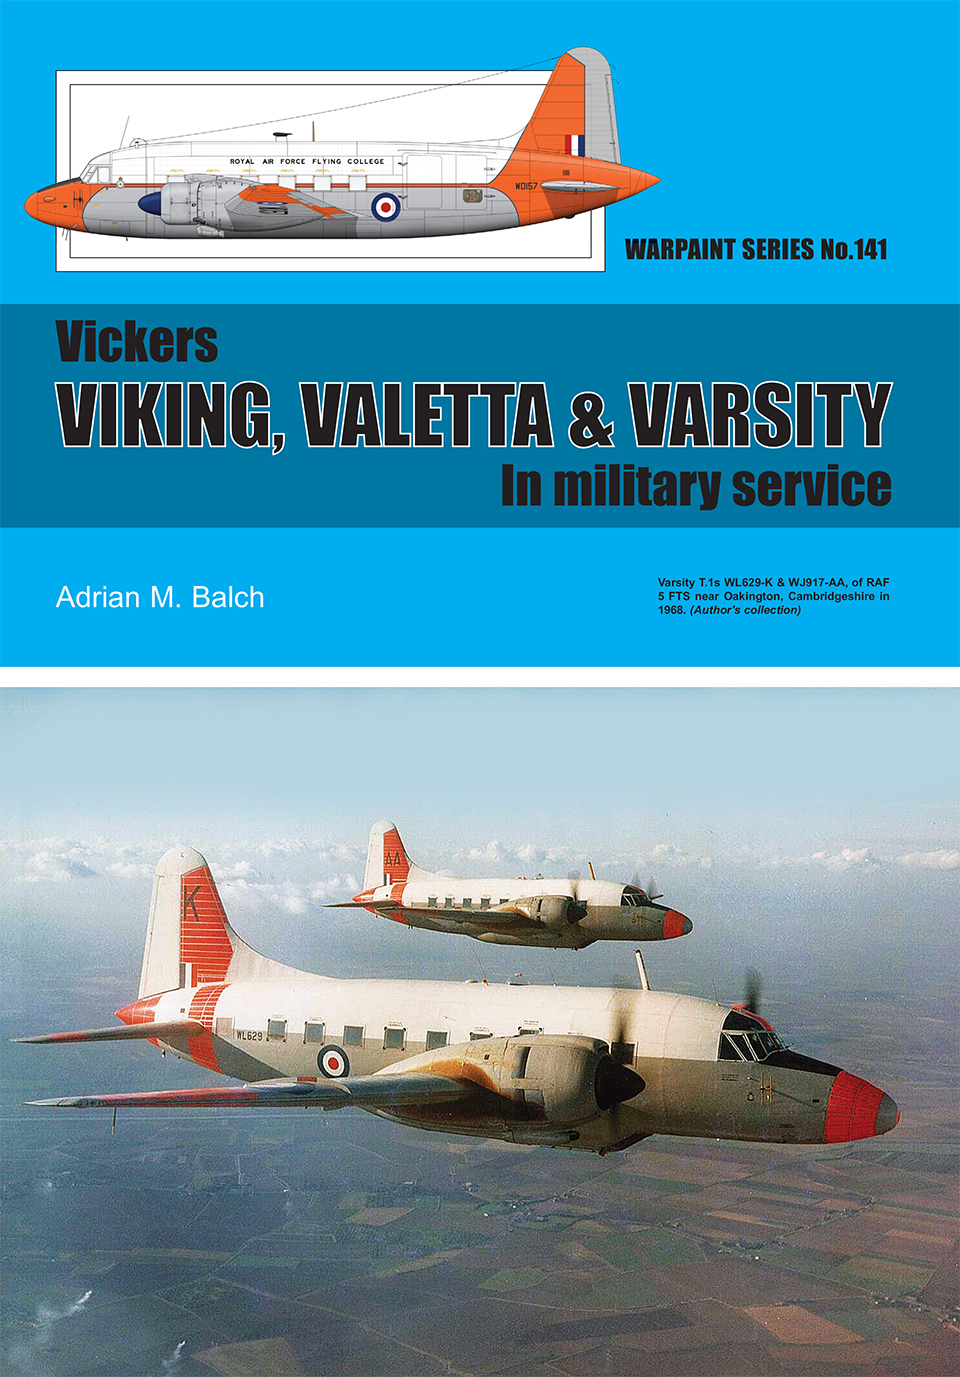 Guideline Publications Ltd Warpaint 141 Vickers Viking- Valetta & Varsity 